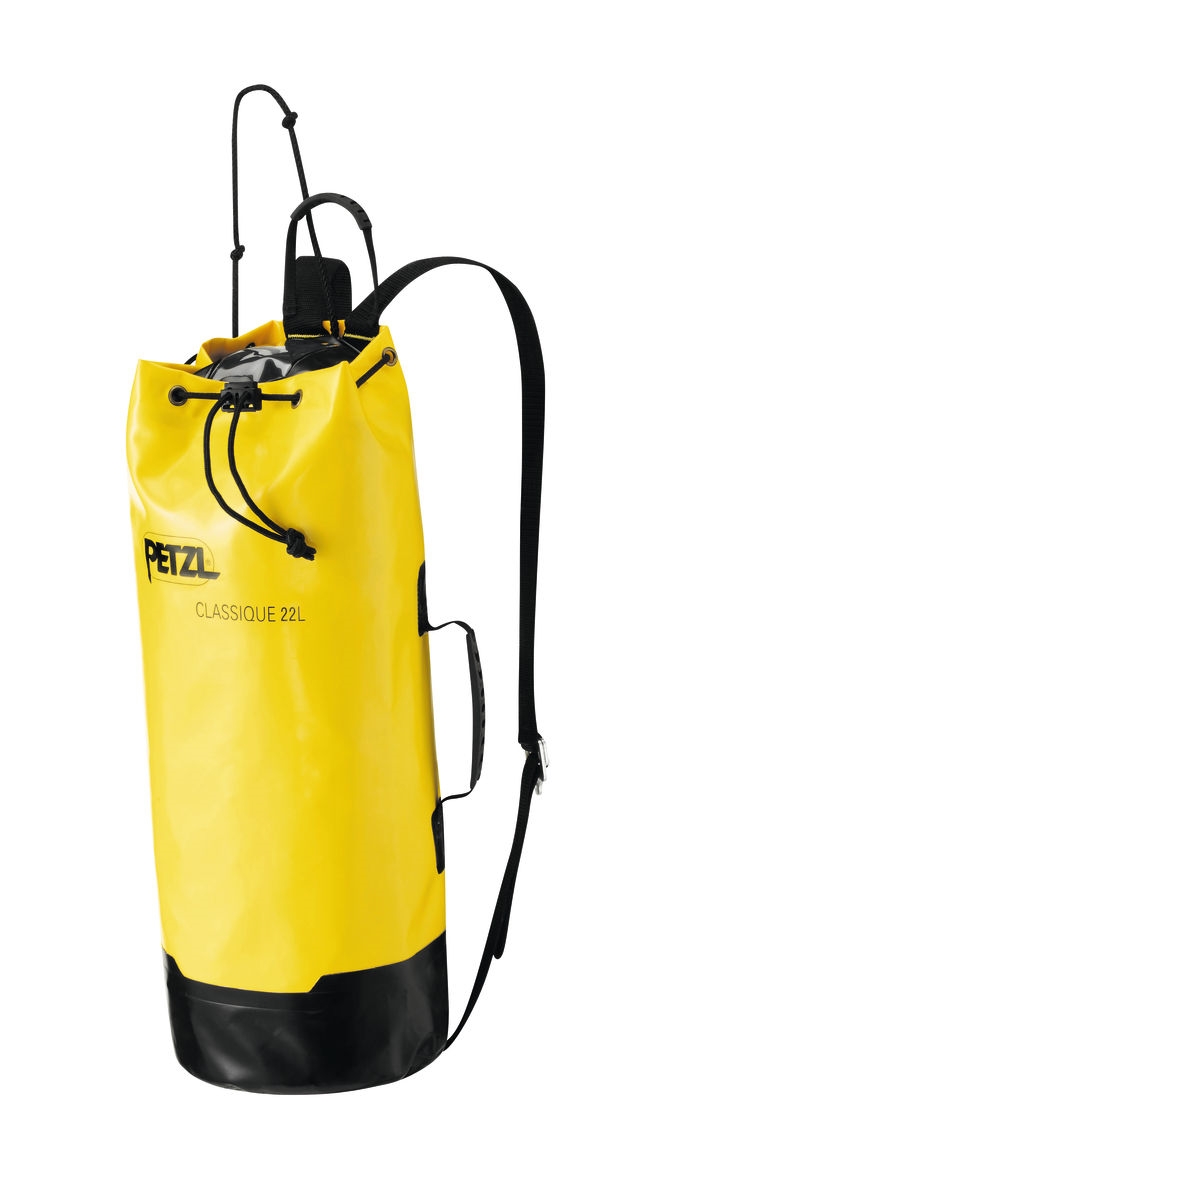 CLASSIQUE Sack Petzl - 22 lt, Höhe 600 mm, Farbe gelb